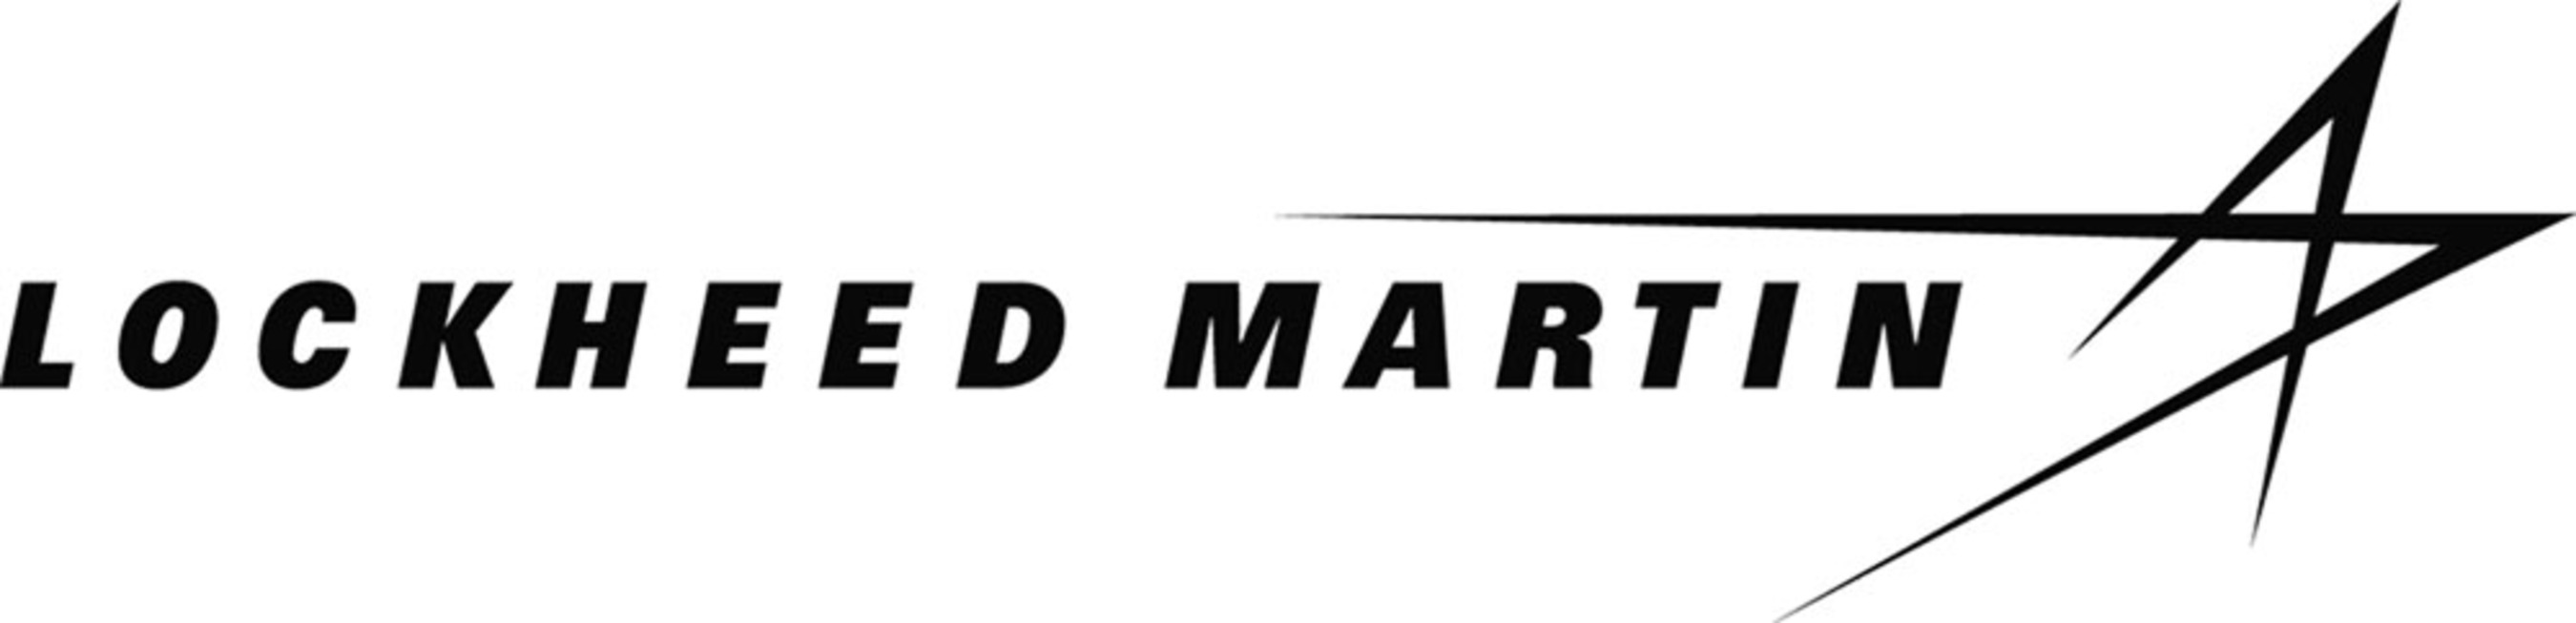 Lockheed Martin Corporation.